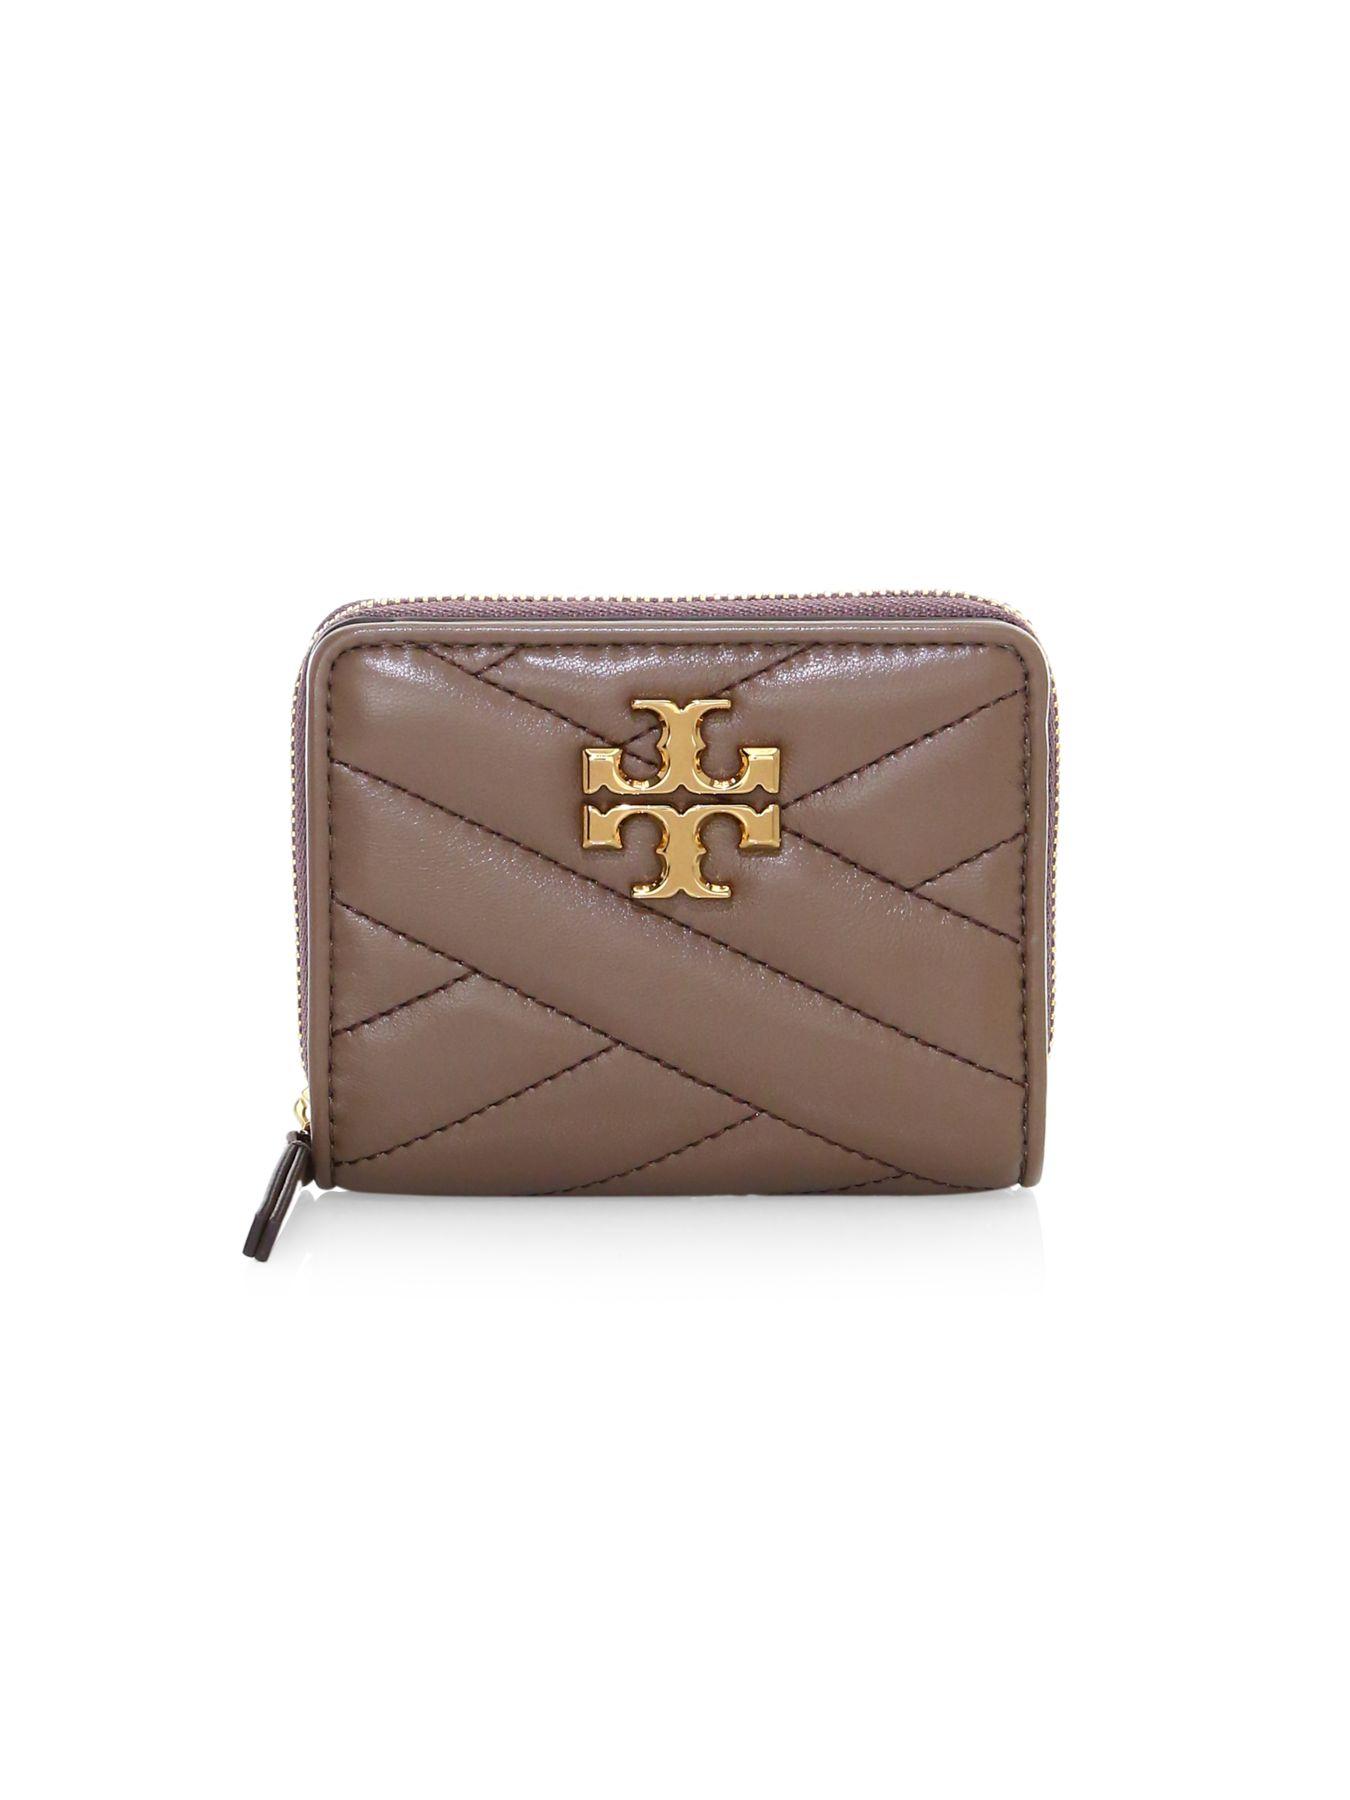 Tory Burch Leather Kira Chevron Bi-fold Wallet in Brown | Lyst